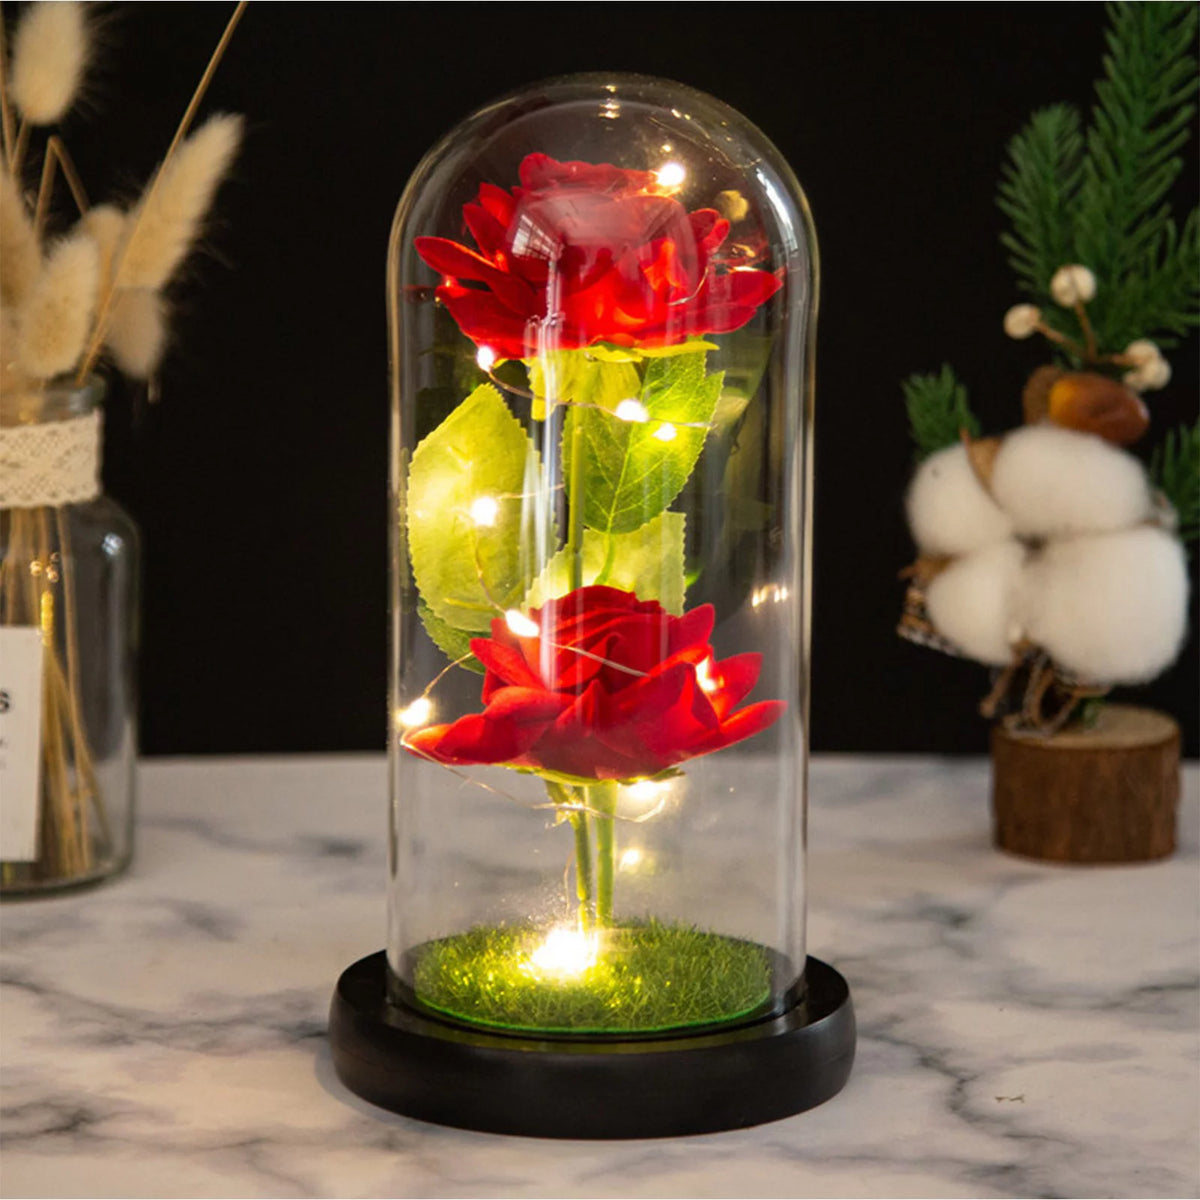 Artifical Flower Rose Gift | Light Up Led Flowers, Forever Red Rose in Glass Dome,